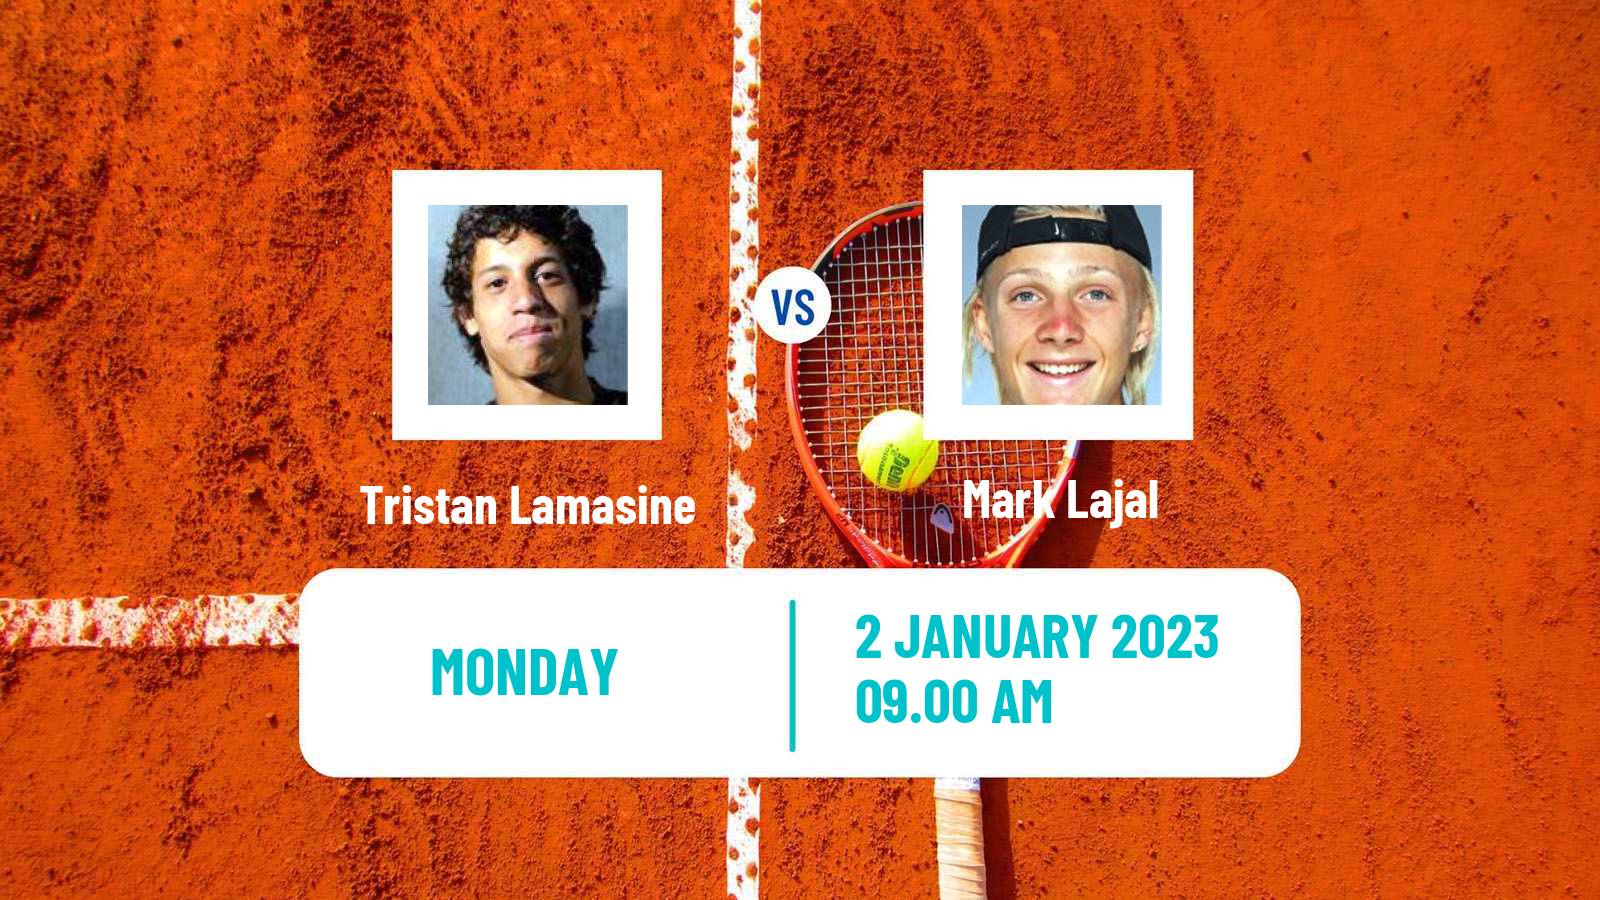 Tennis ATP Challenger Tristan Lamasine - Mark Lajal